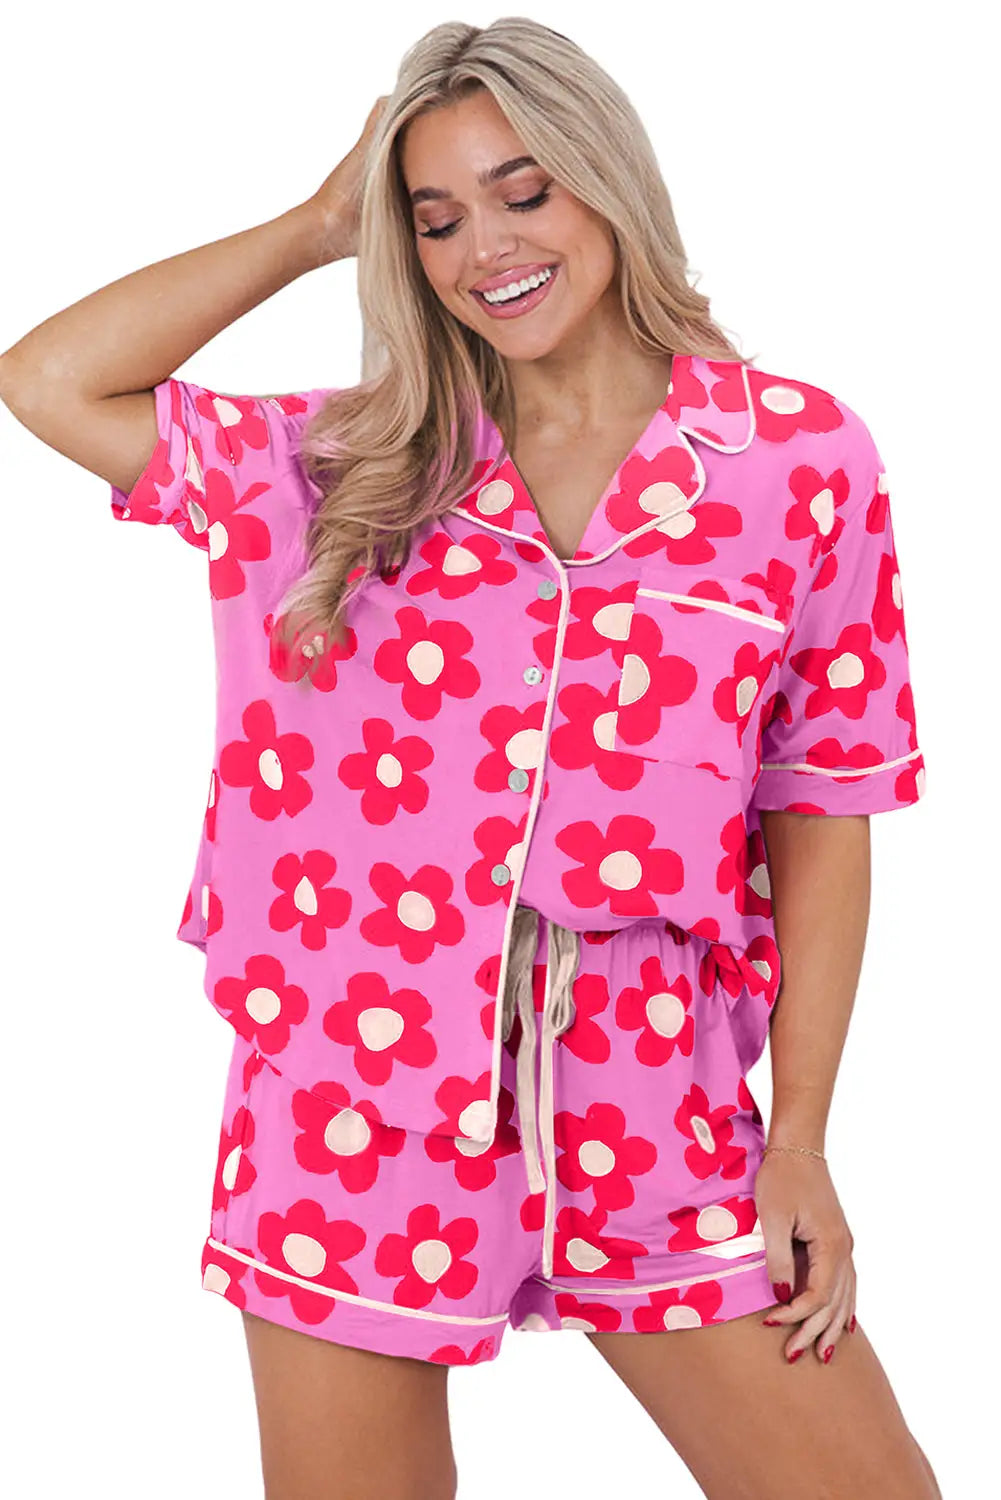 Flower shorts pajamas set - loungewear & sleepwear/sleepwear